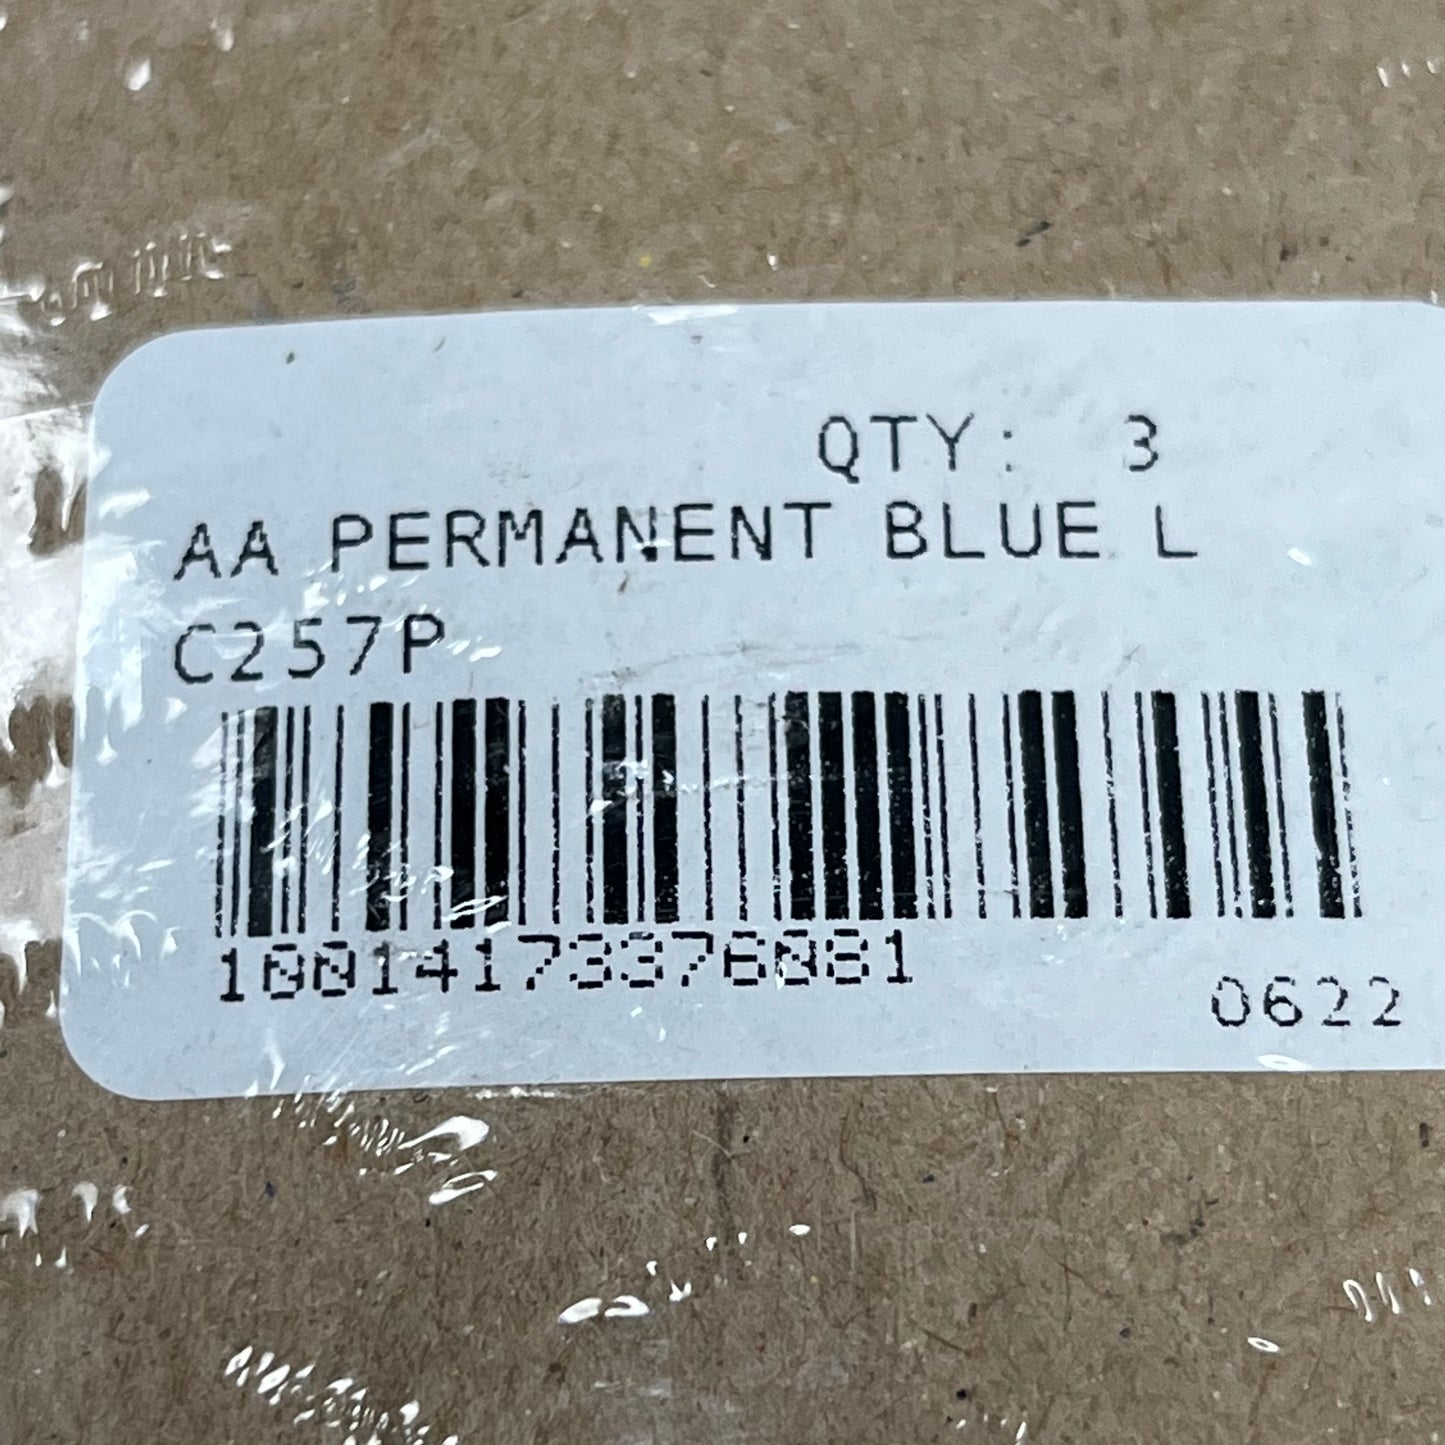 GRUMBACHER 3-PACK! Academy Acrylic Permanent Blue Light 2.5 fl oz / 75 ml C257P (New)